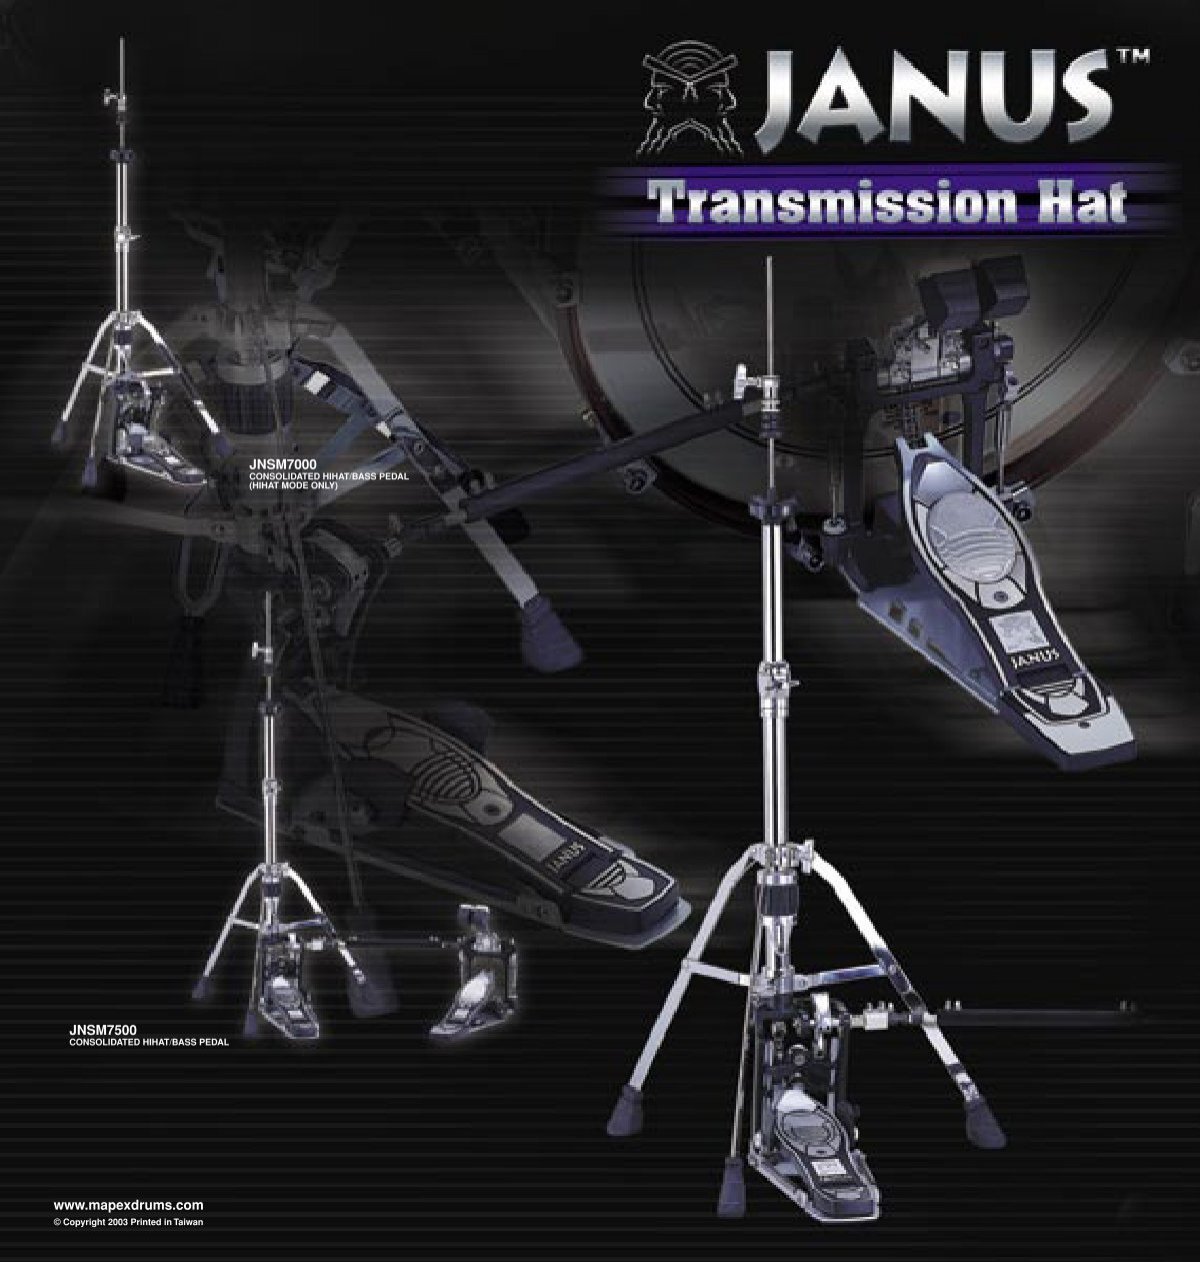 Janus Transmission Hat Catalog - Mapex